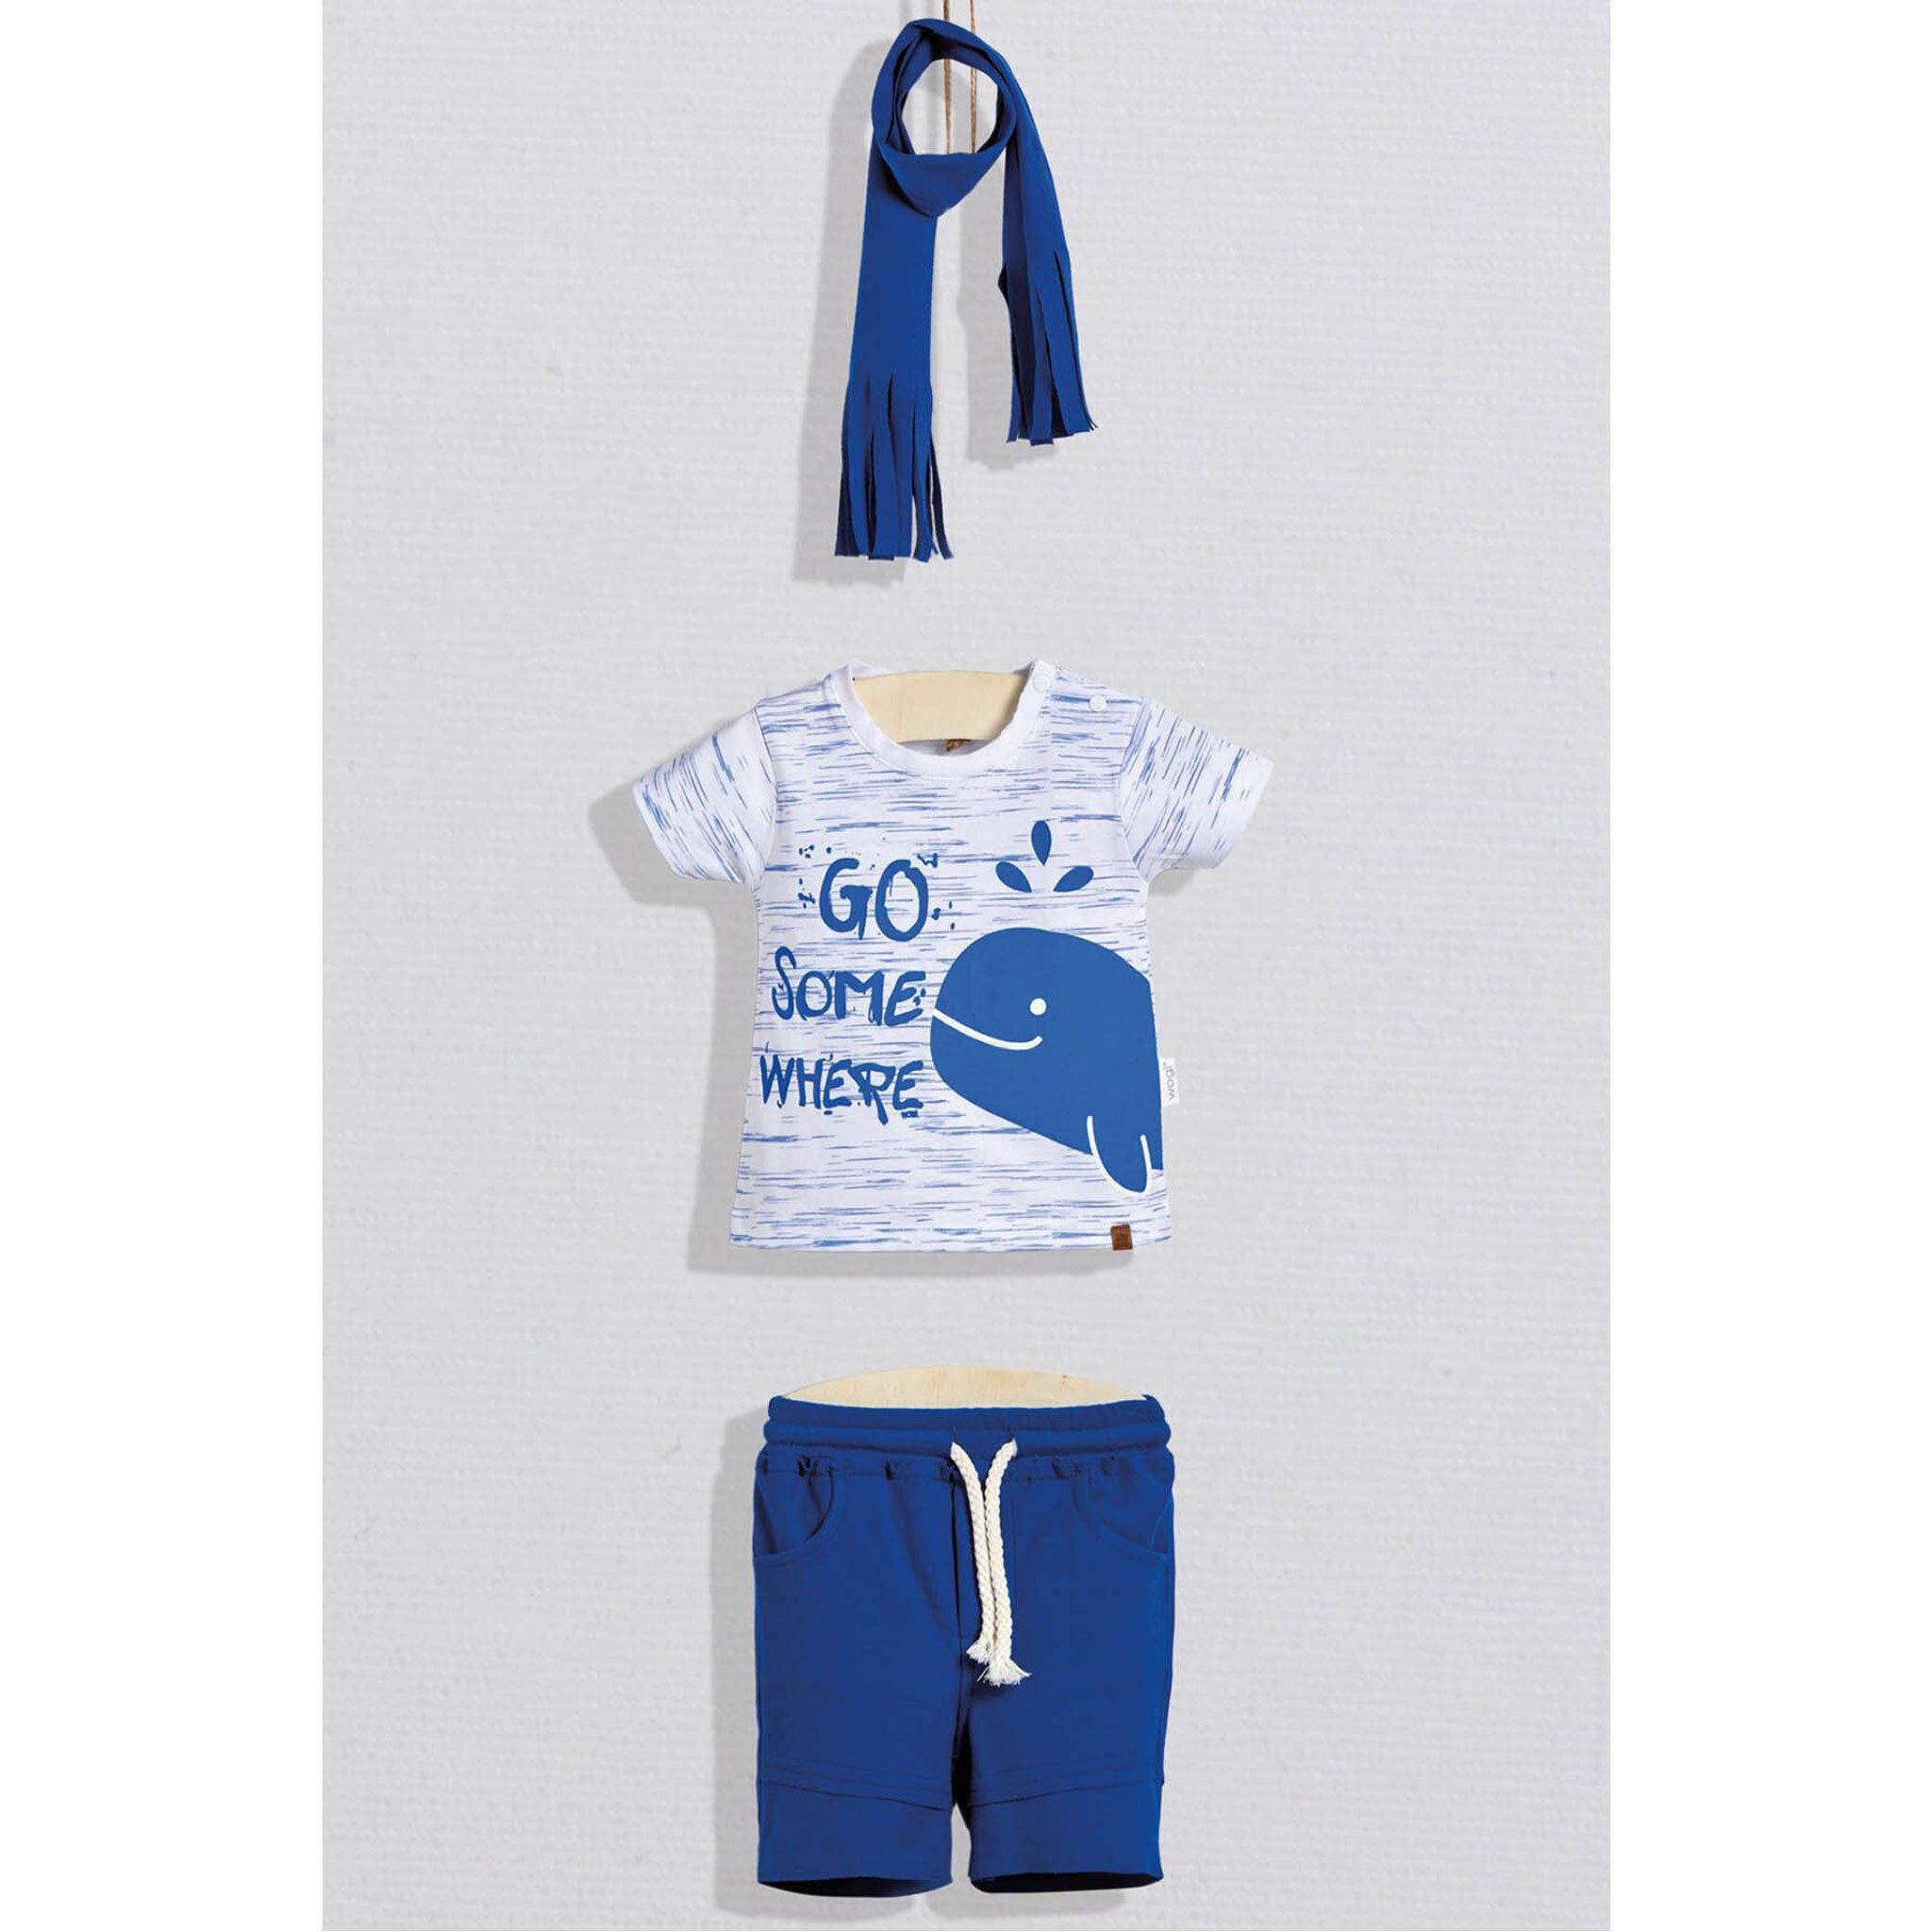 Dolphin Baby Boy Shorts & T-shirt - Set of 3 Pieces - Dolphin Baby Boy Shorts & T-shirt - Set of 3 Pieces - 3-6 Months - Wogi - Melymod